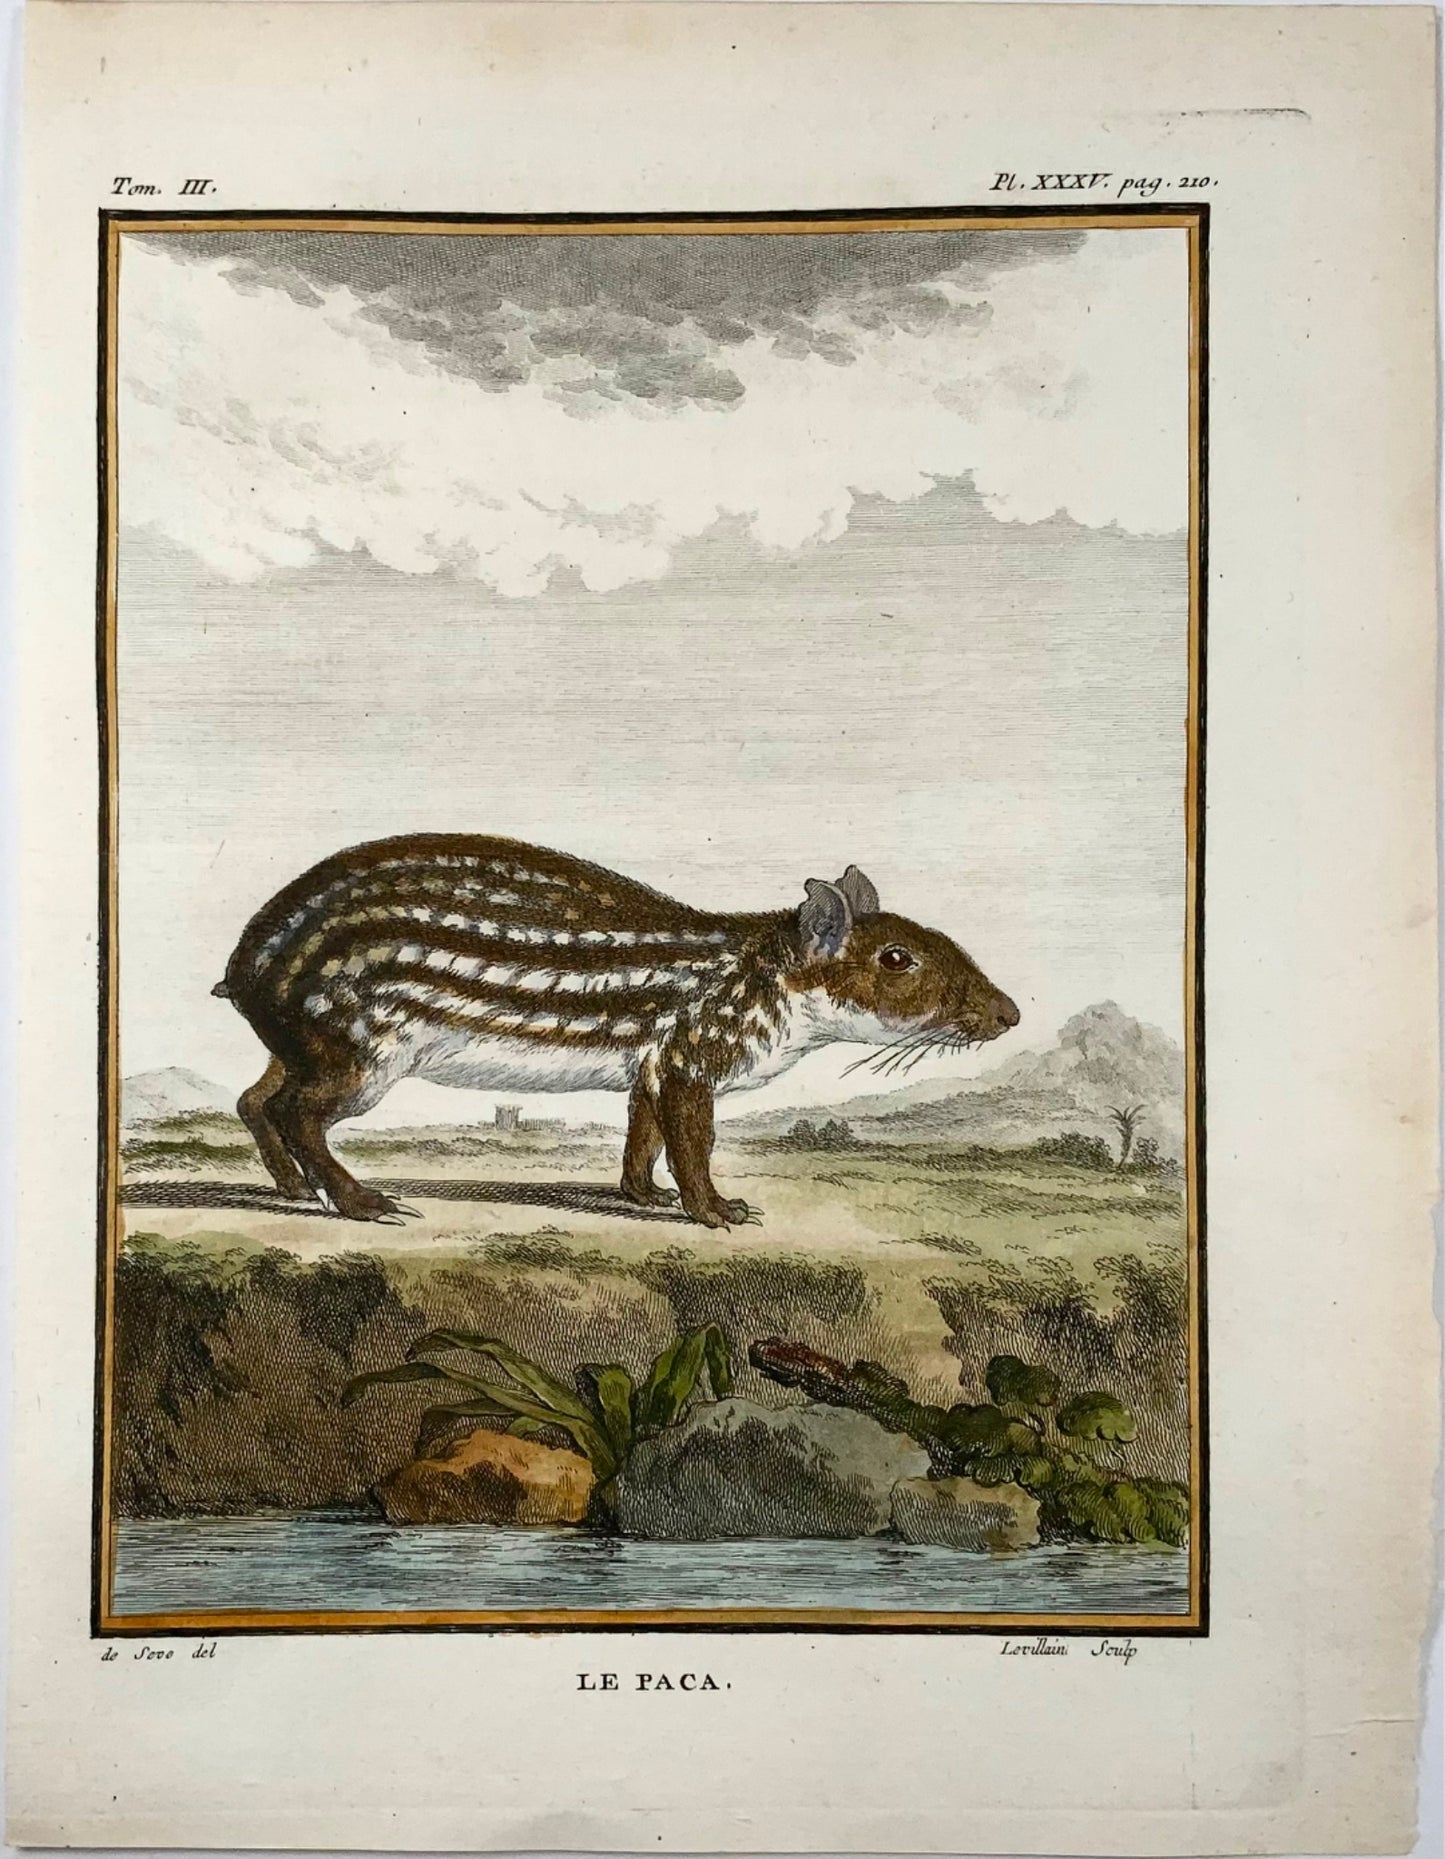 1779 Paca; J. de Seve, Mammal, 4to engraving